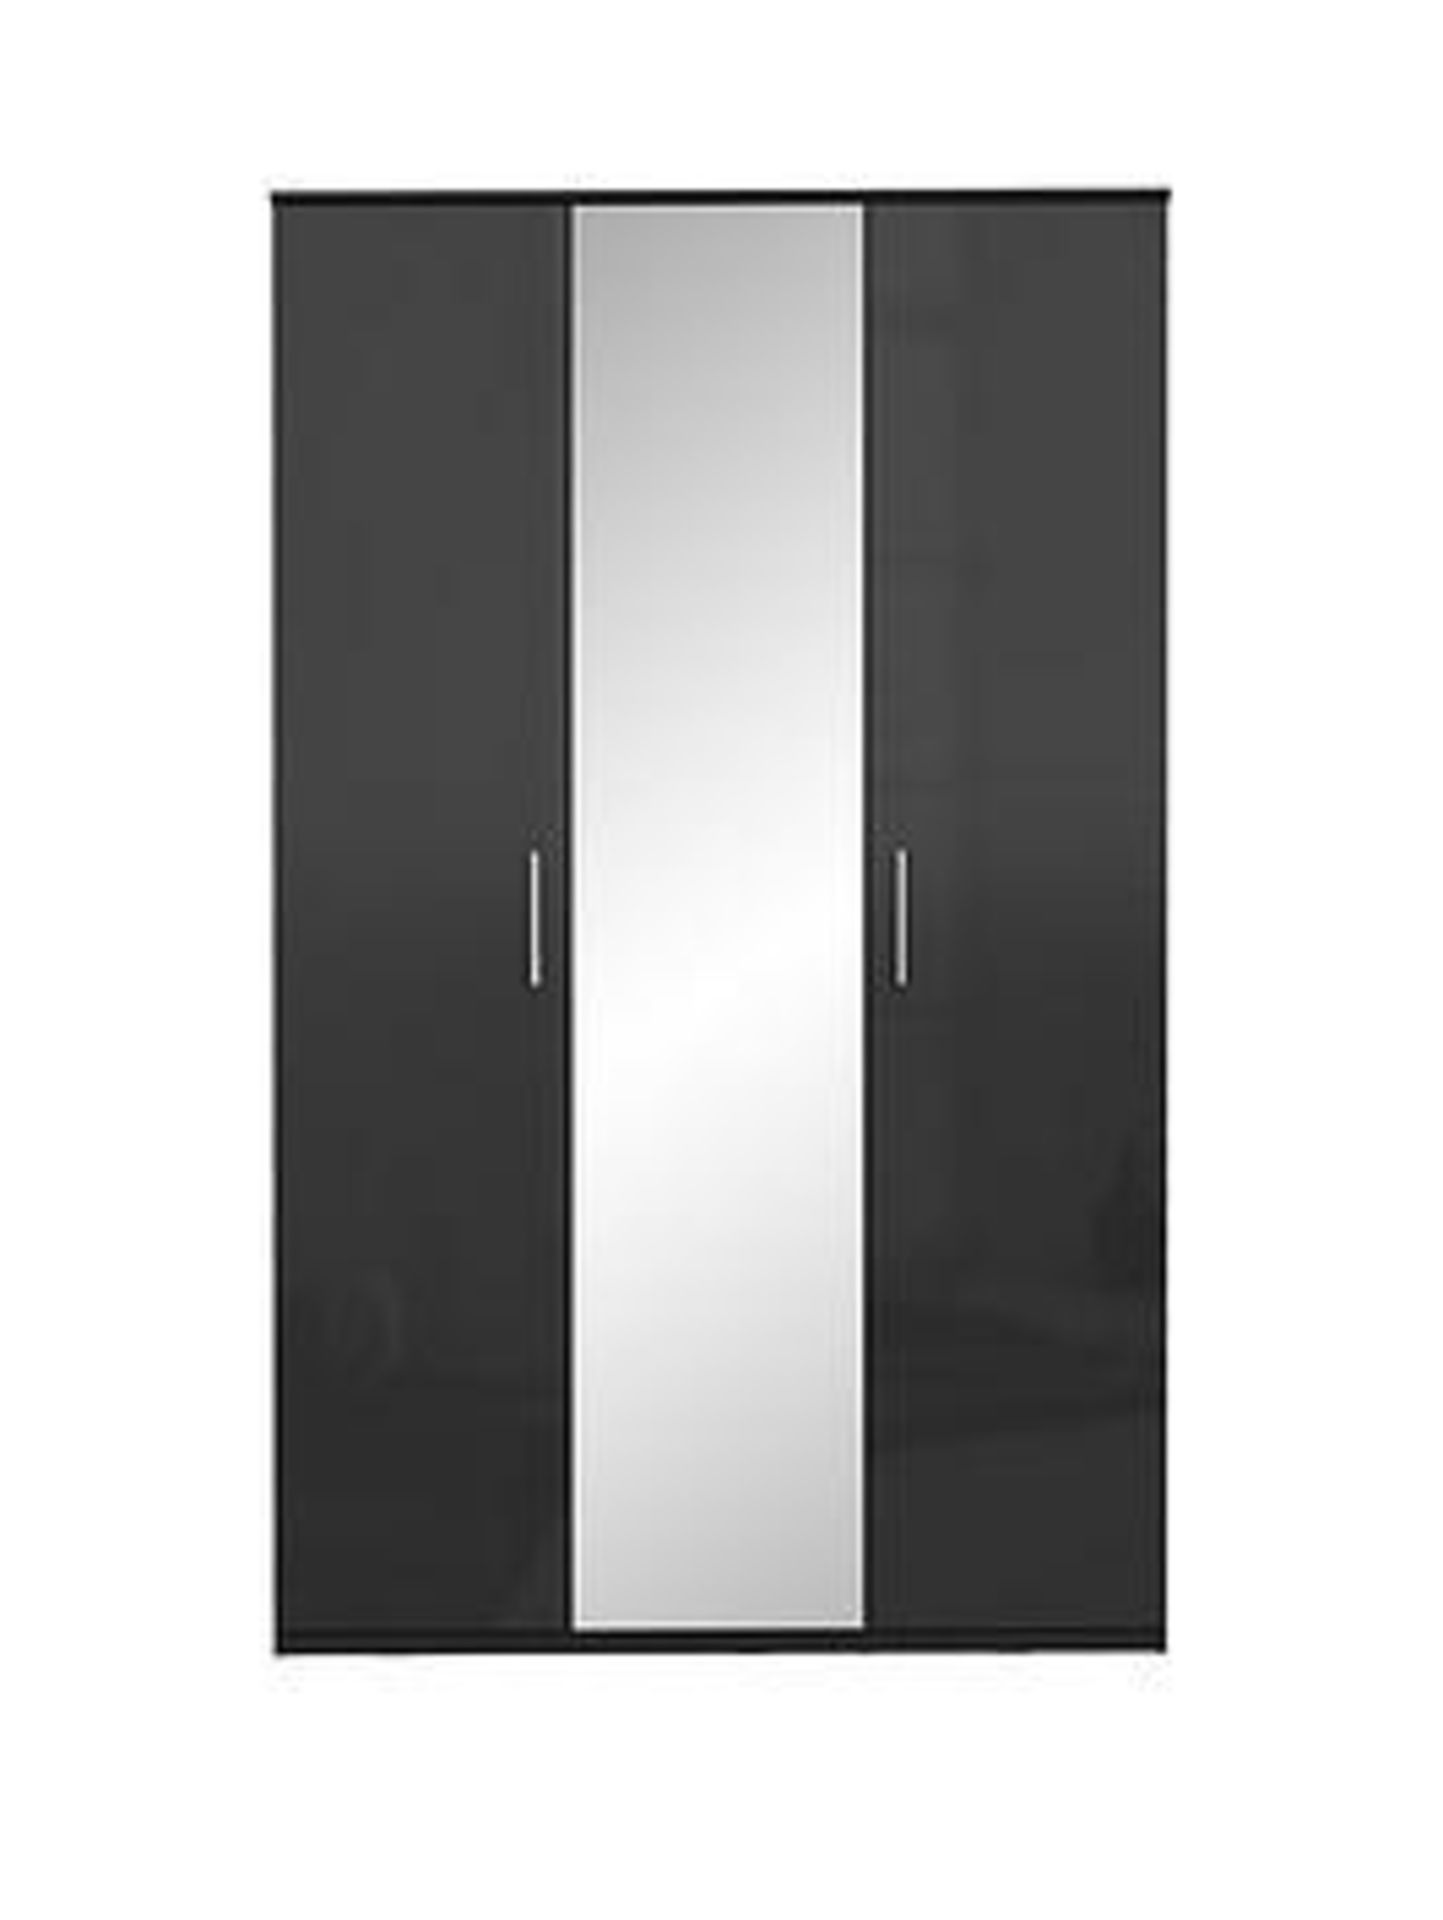 Boxed Item Westbury 3 Doors Wardrobe [Black Gloss] 201X121X55Cm Rrp:£382.0 - Image 2 of 2